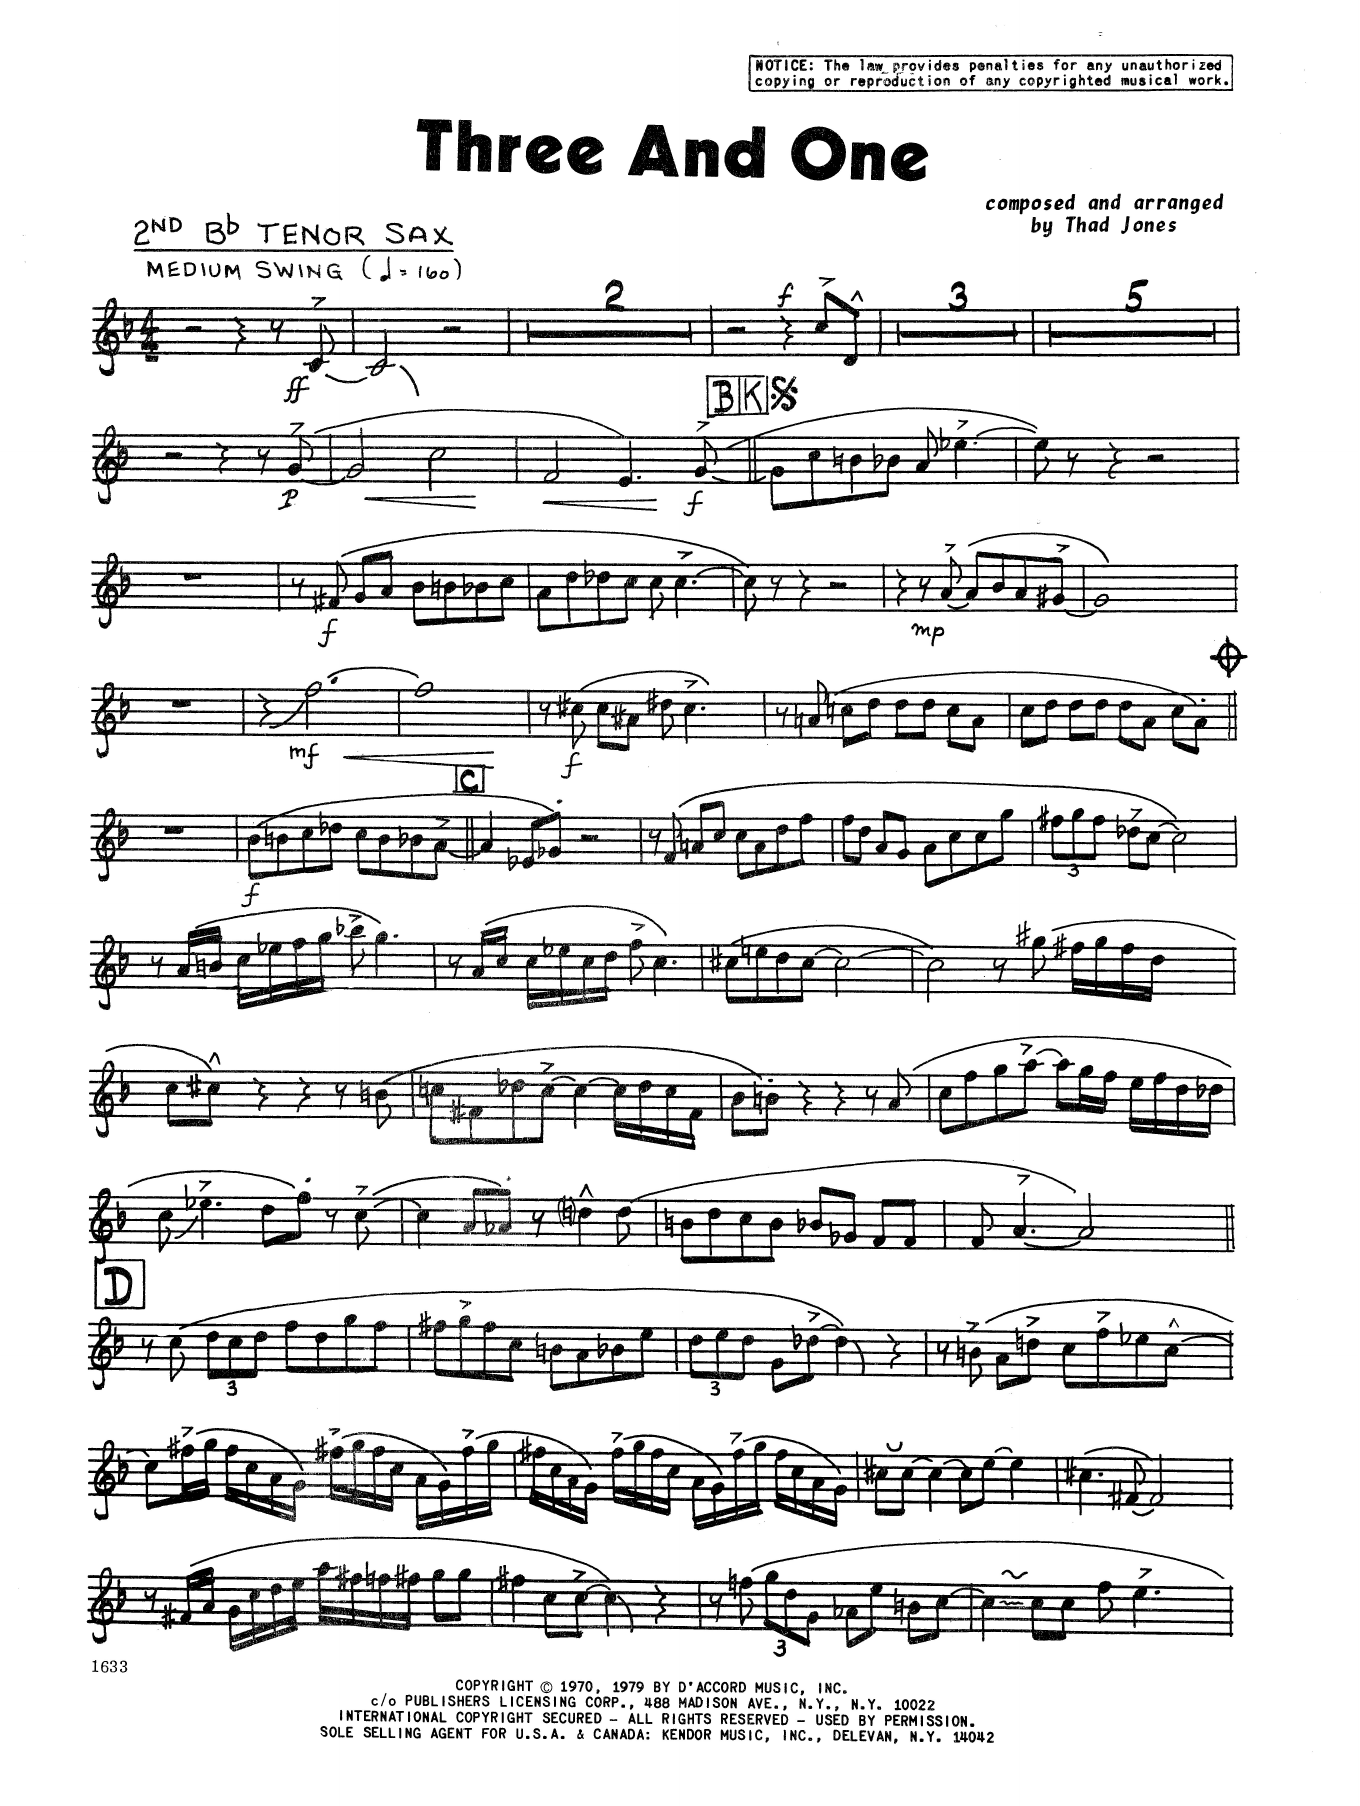 Download Thad Jones Three And One - 2nd Bb Tenor Saxophone Sheet Music